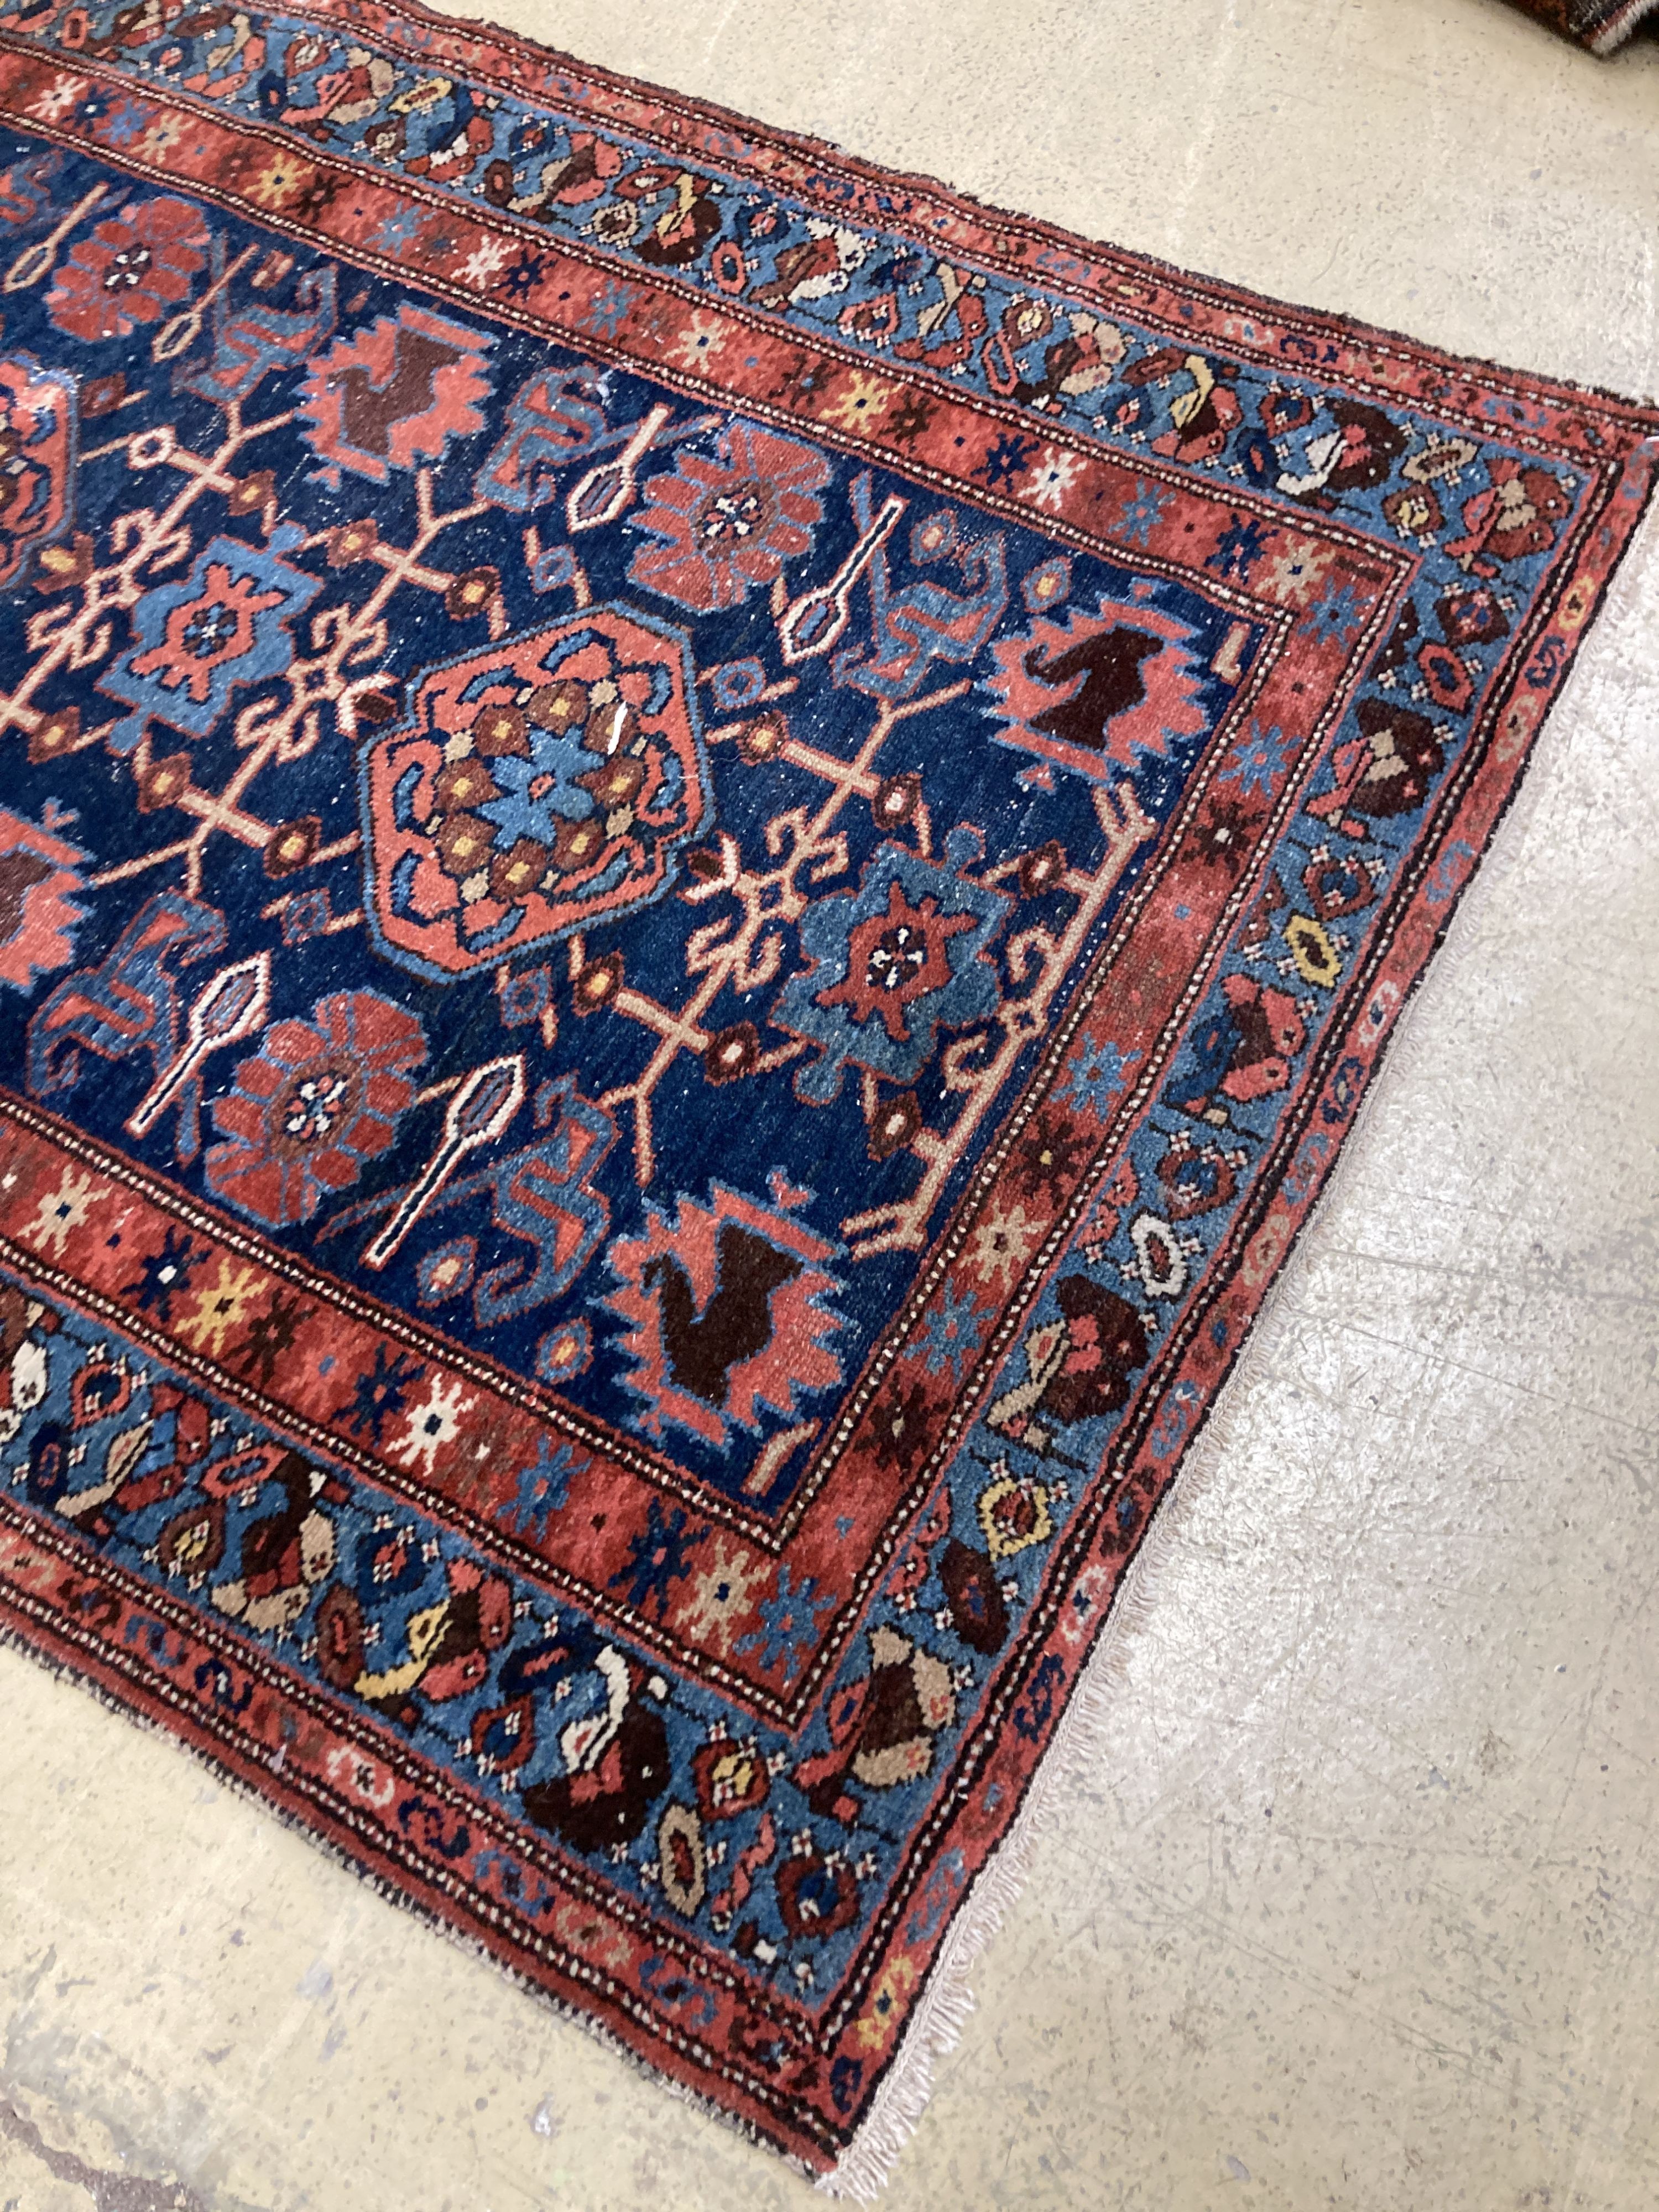 An antique Hamadan blue ground rug, 180 x 104cm